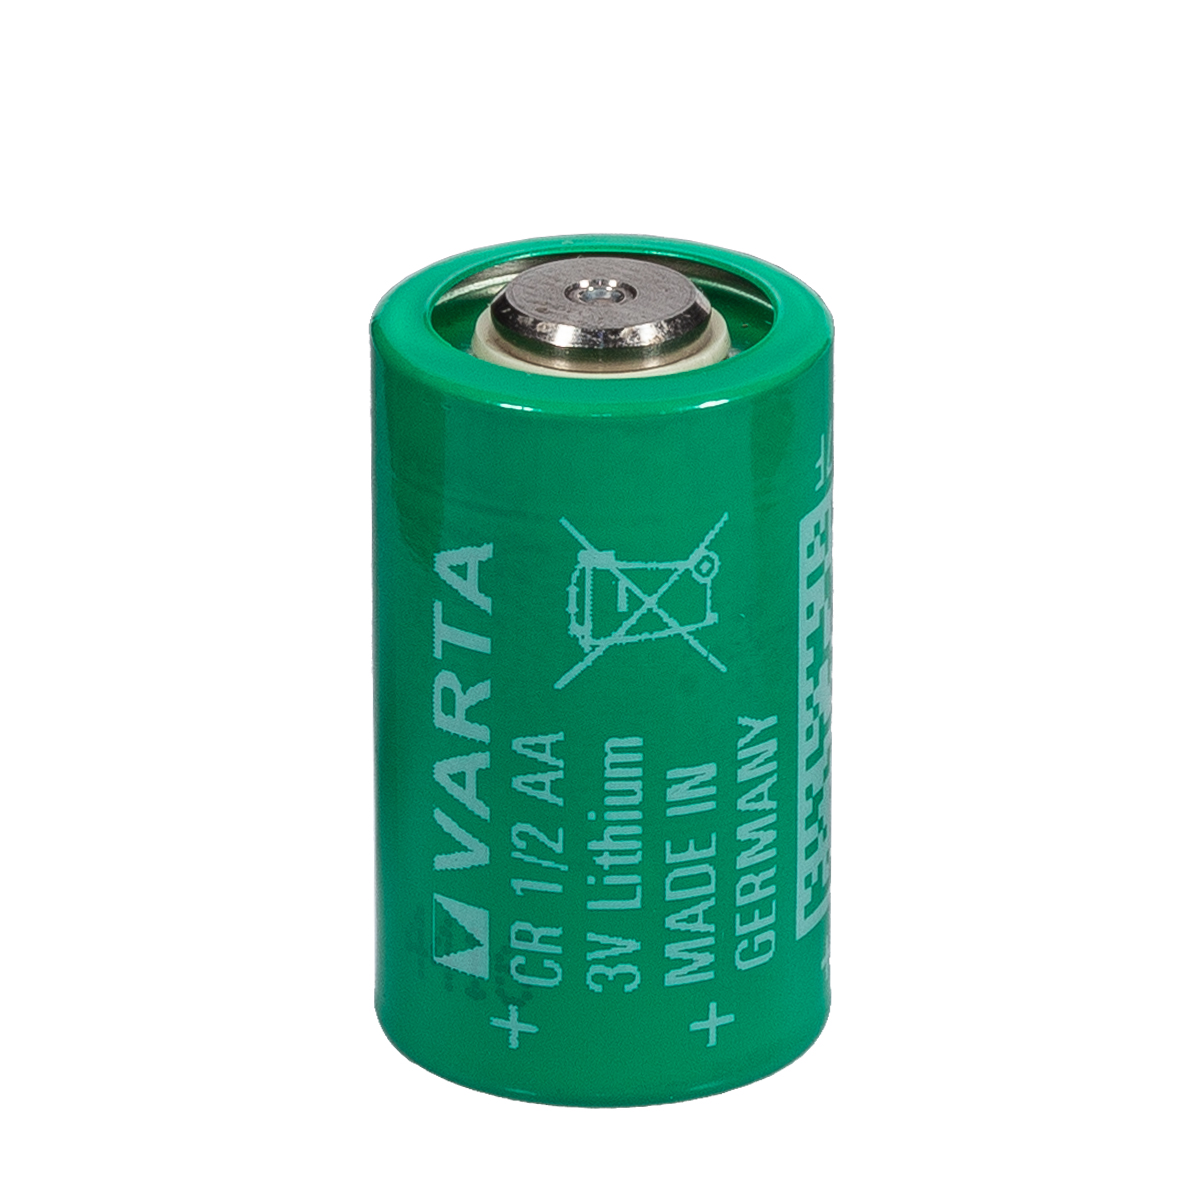 Аккумулятор 3 5. CR 1/2 AA Varta 3v. Varta cr1/2 AA. 3.0V 14250 CR 1/2 AA Varta Lithium. 14250 - 1/2 AA Varta 3.0v.